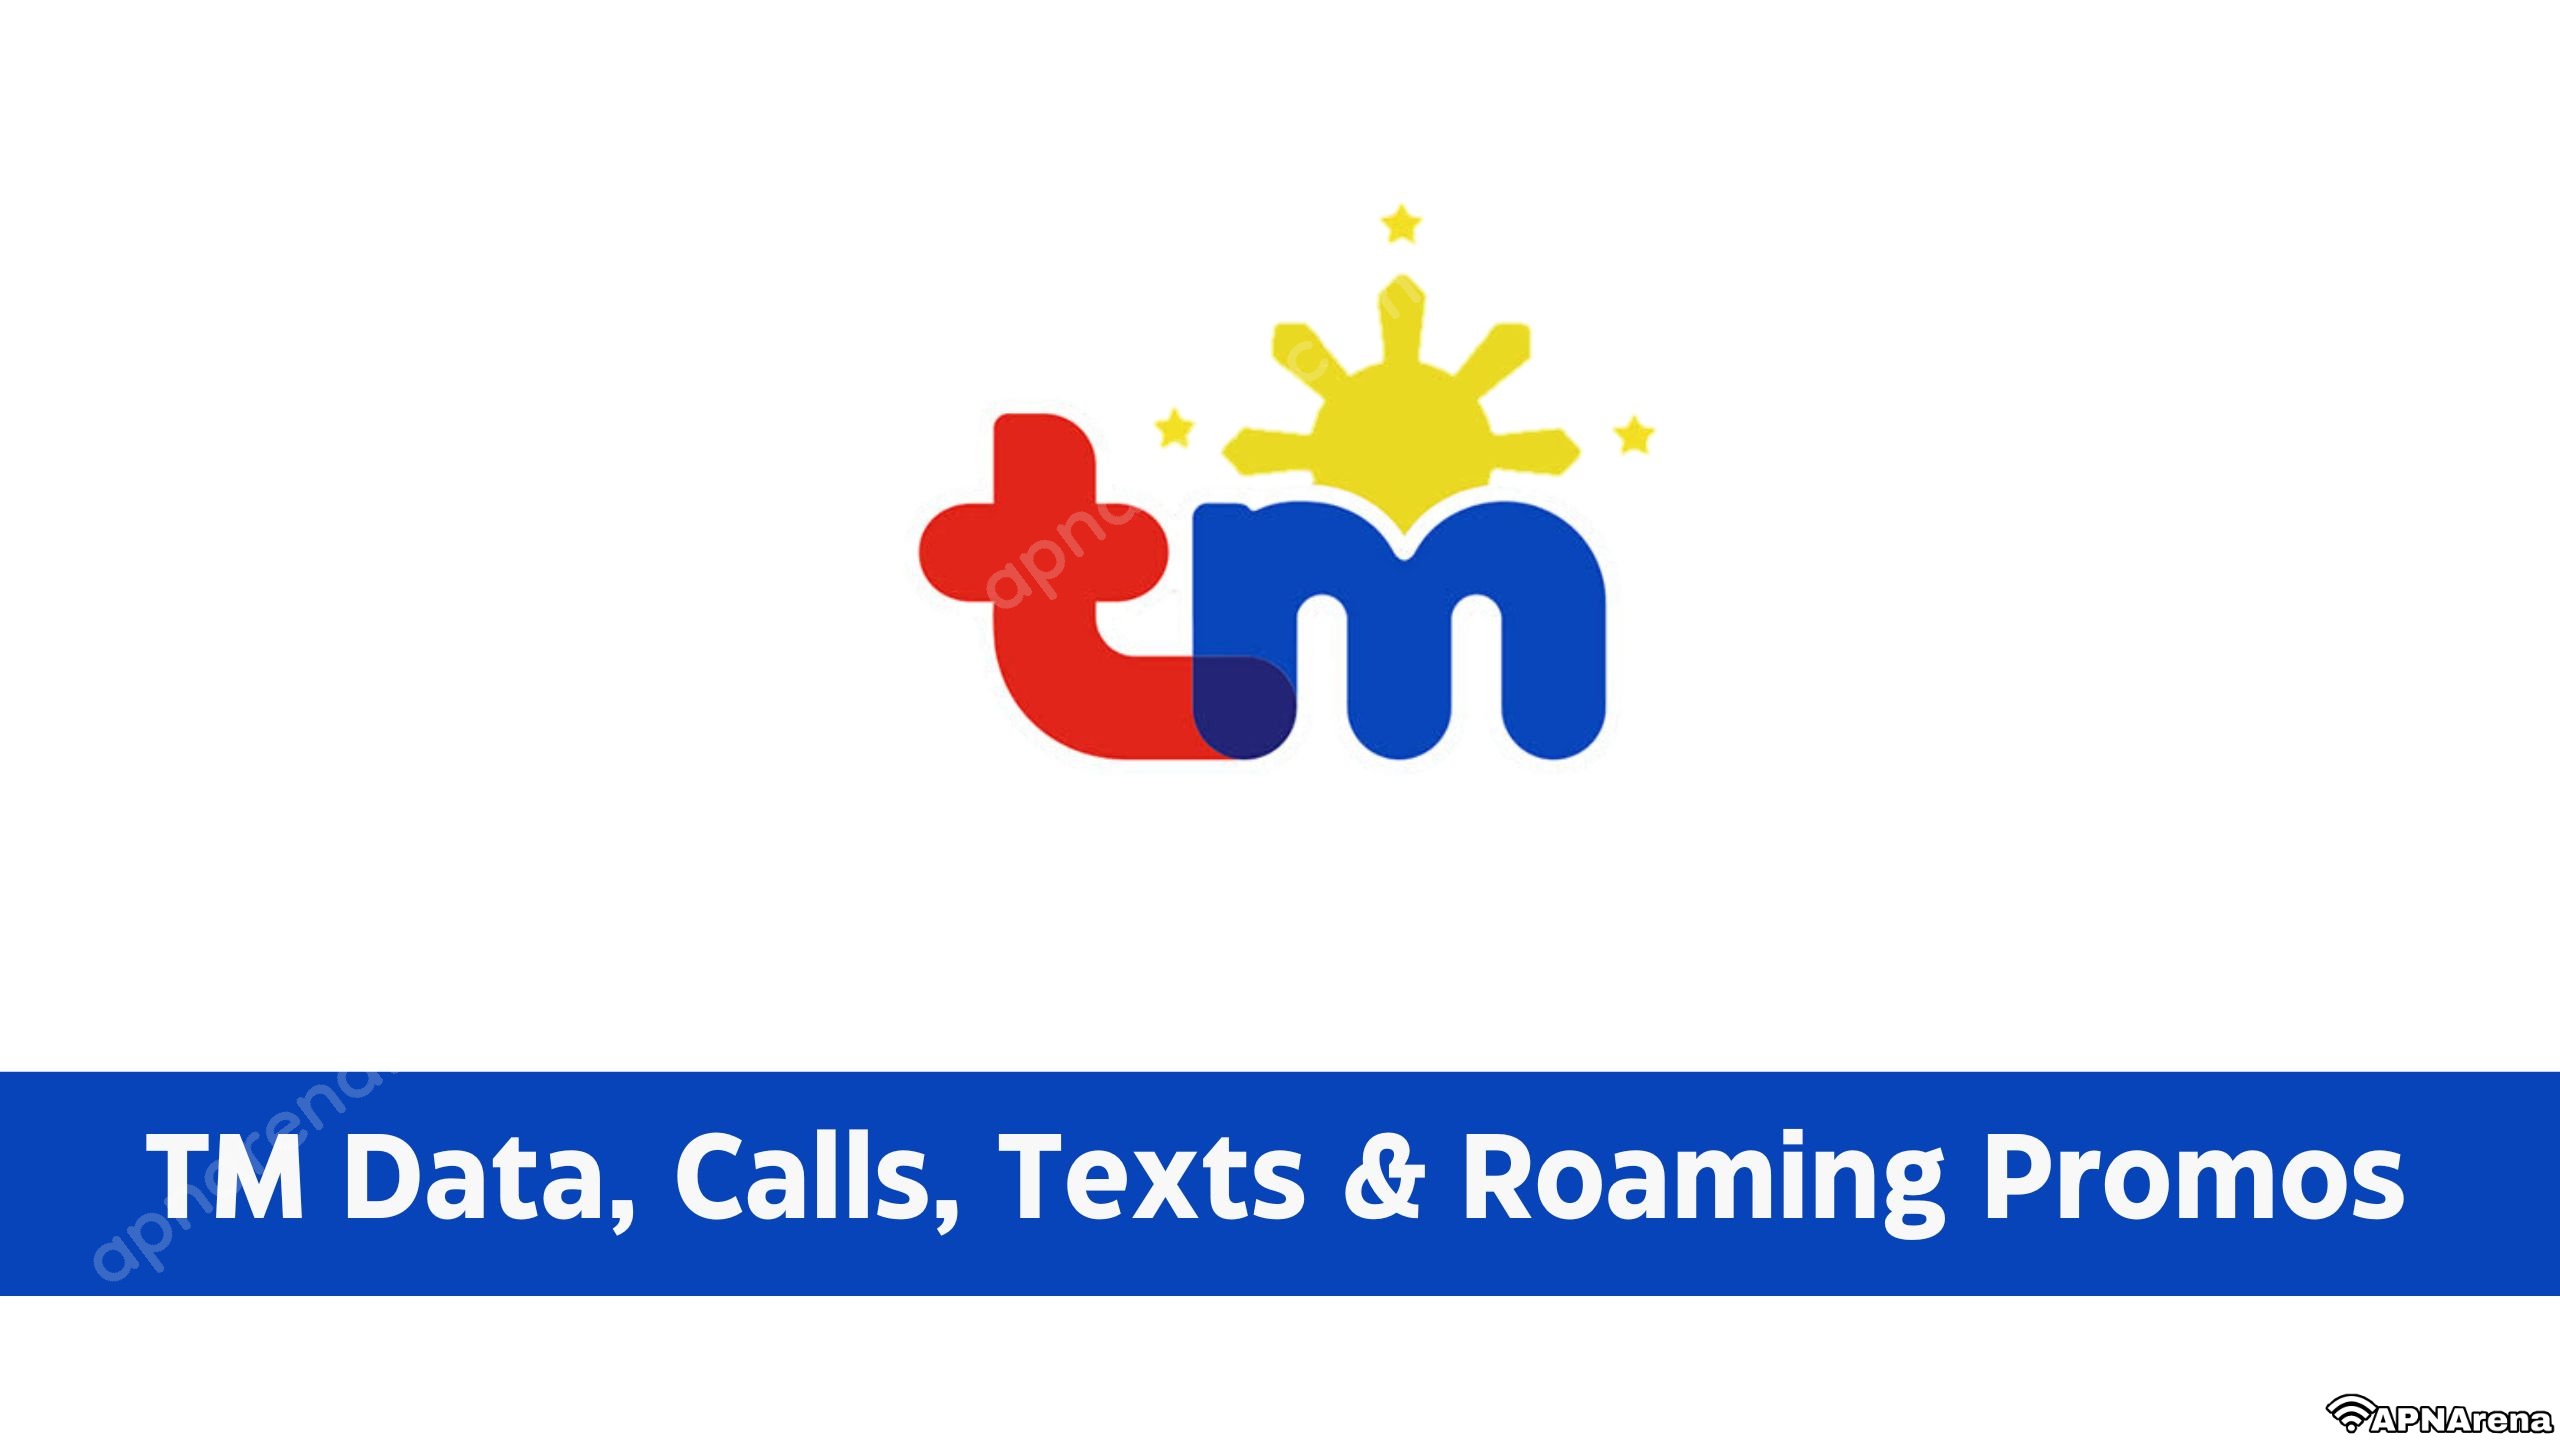 TM Data and Roaming Promo and UNLI Calls, Texts, Internet, Load, International Promo List